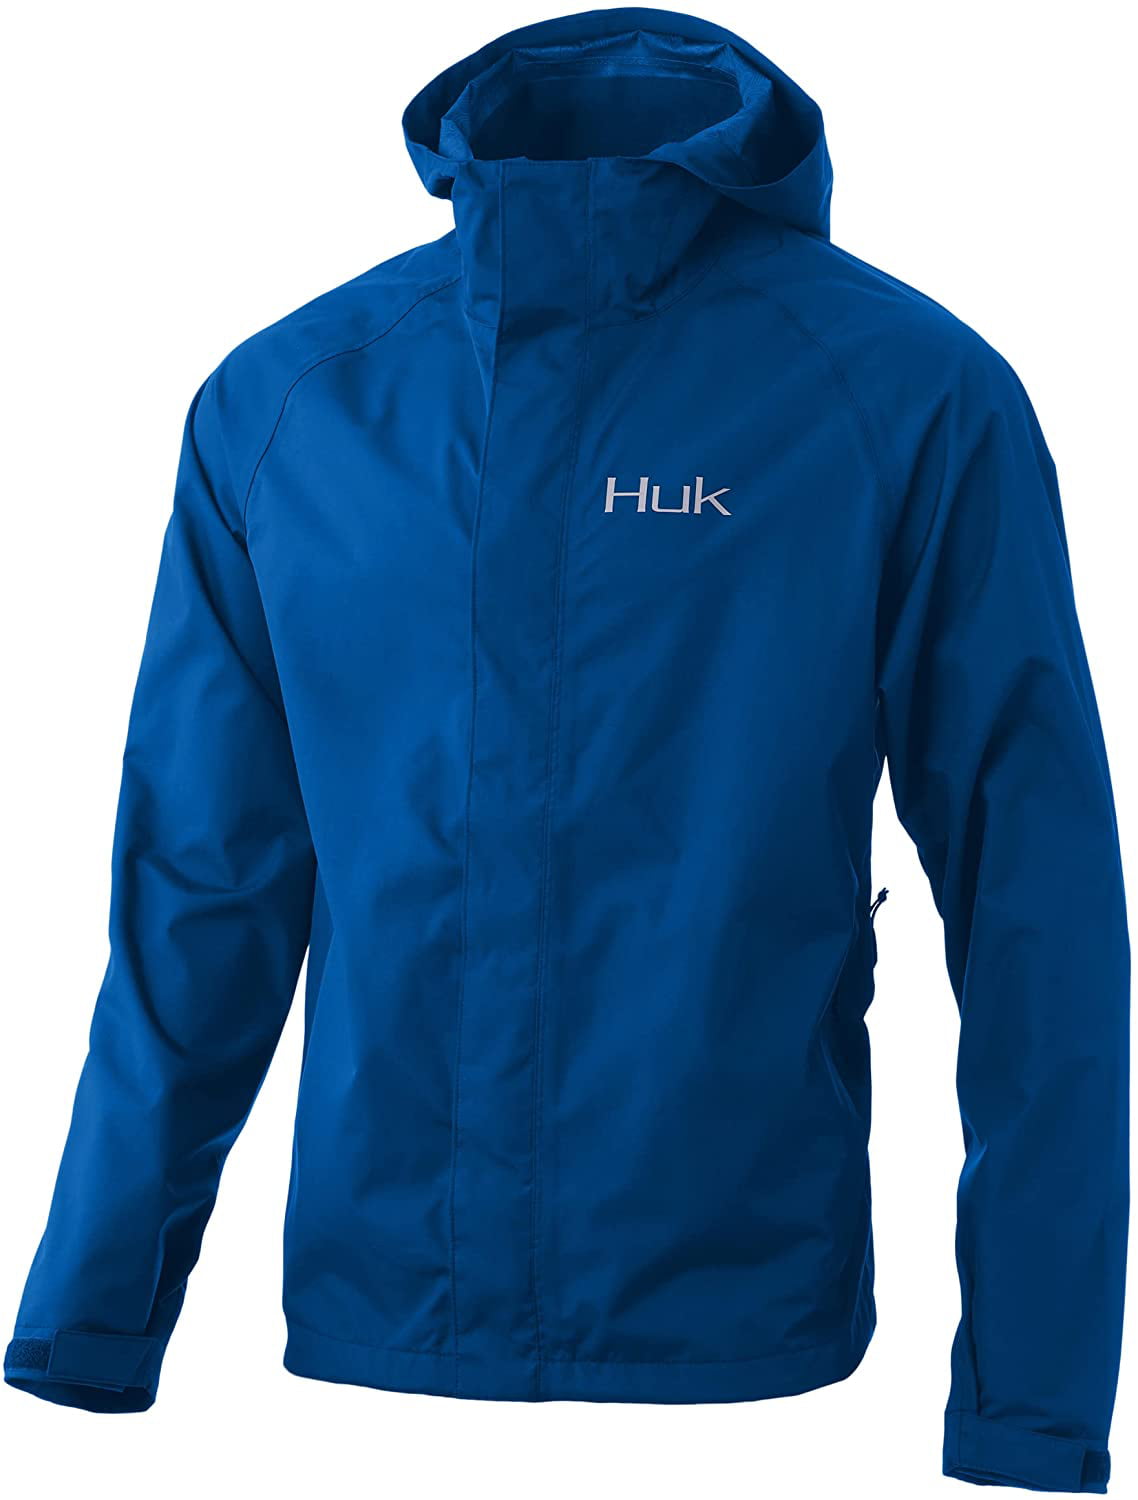 Huk Men's Gunwale Huk Blue X-Large Performance Fishing Rain Jacket